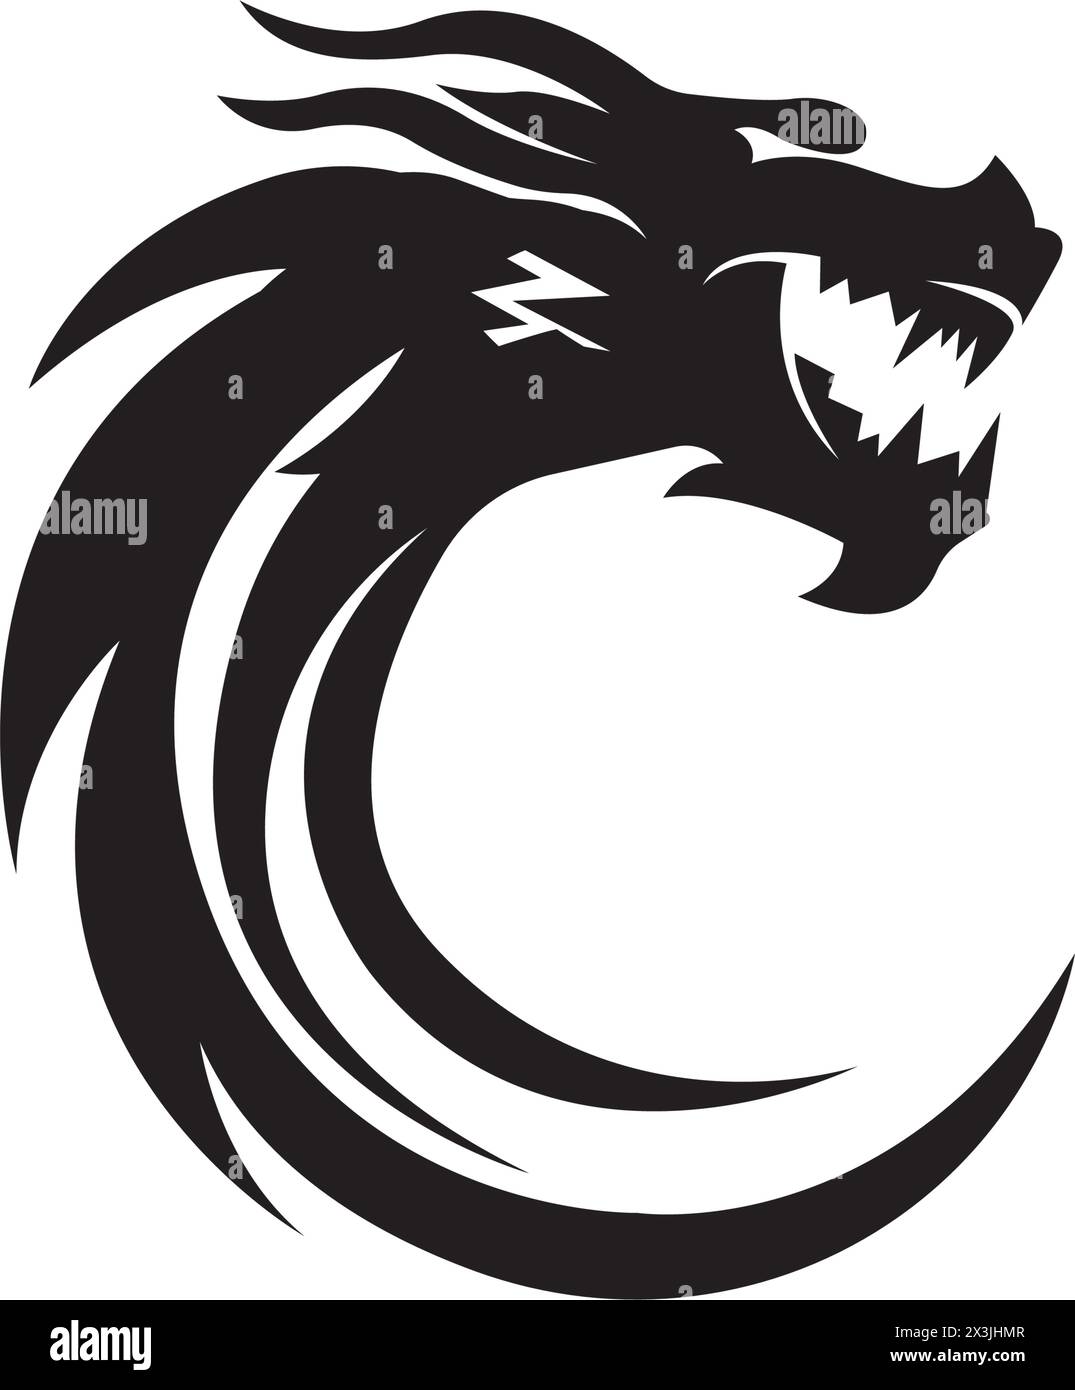 Dragon head icon logo, vector design illustration Stock Vector